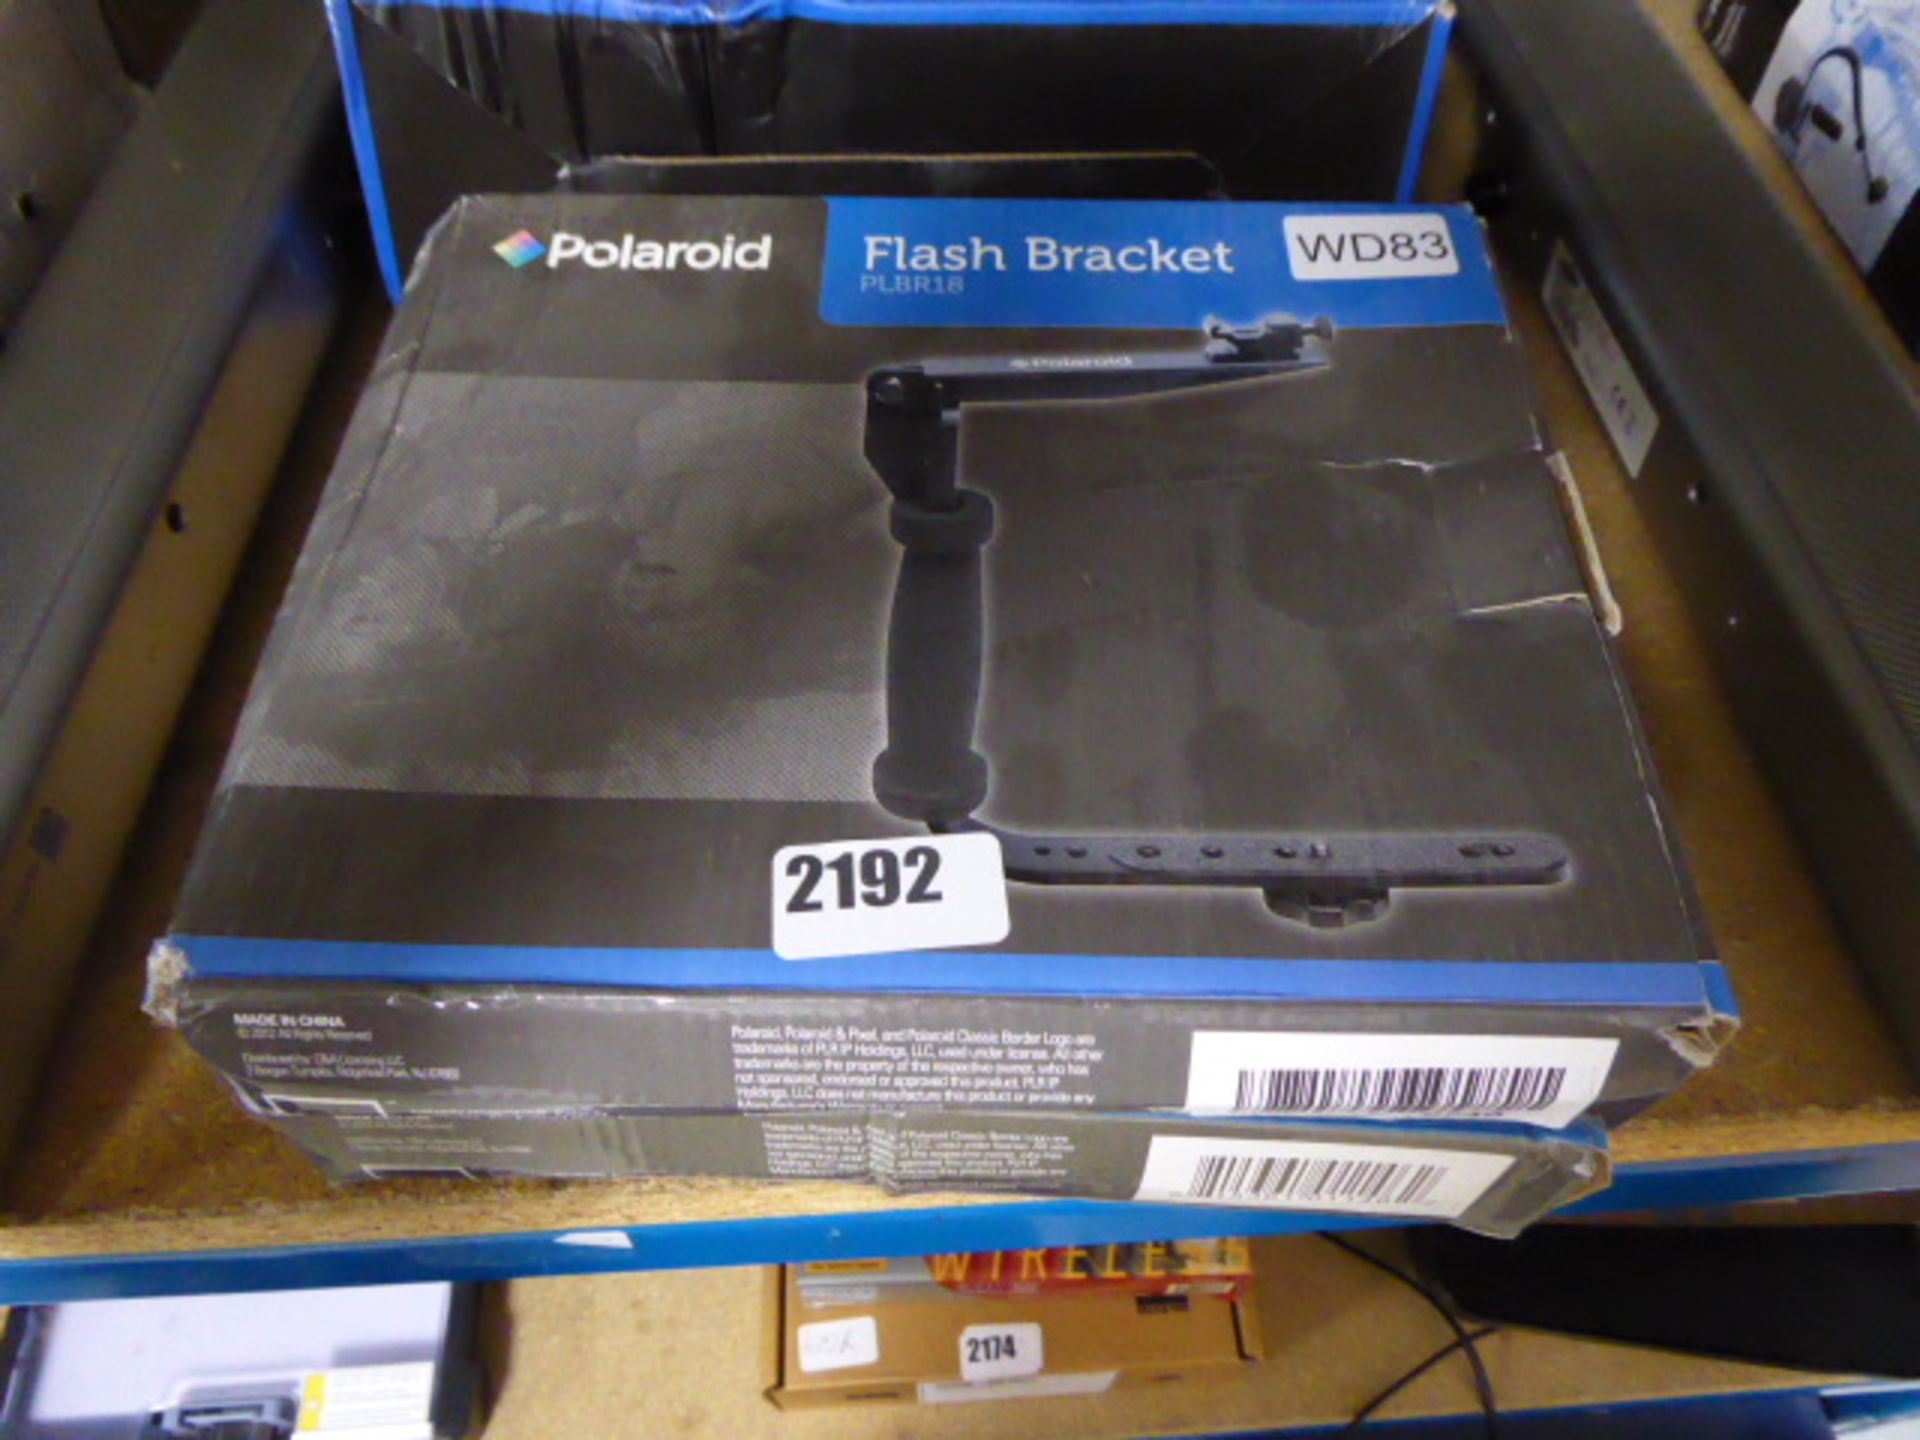 2 Polaroid flash brackets in boxes